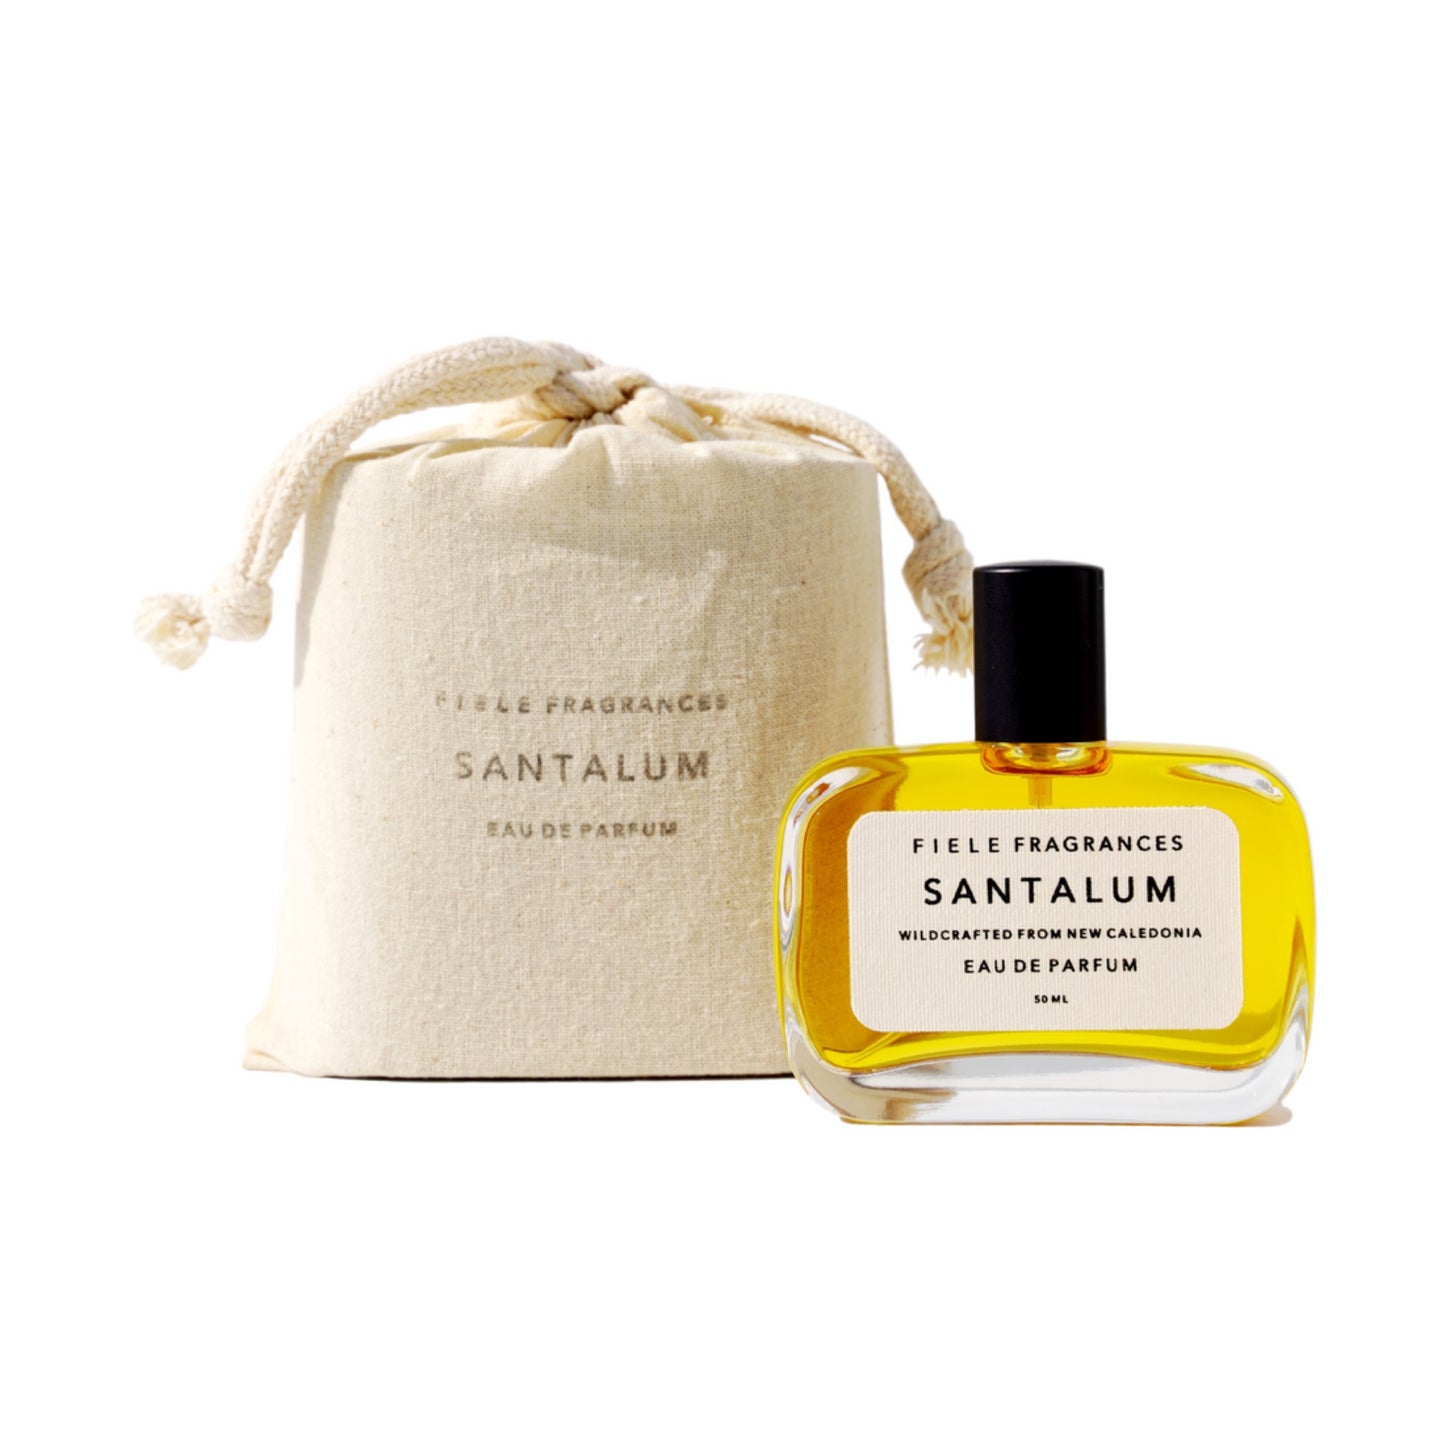 fiele fragrances / santalum